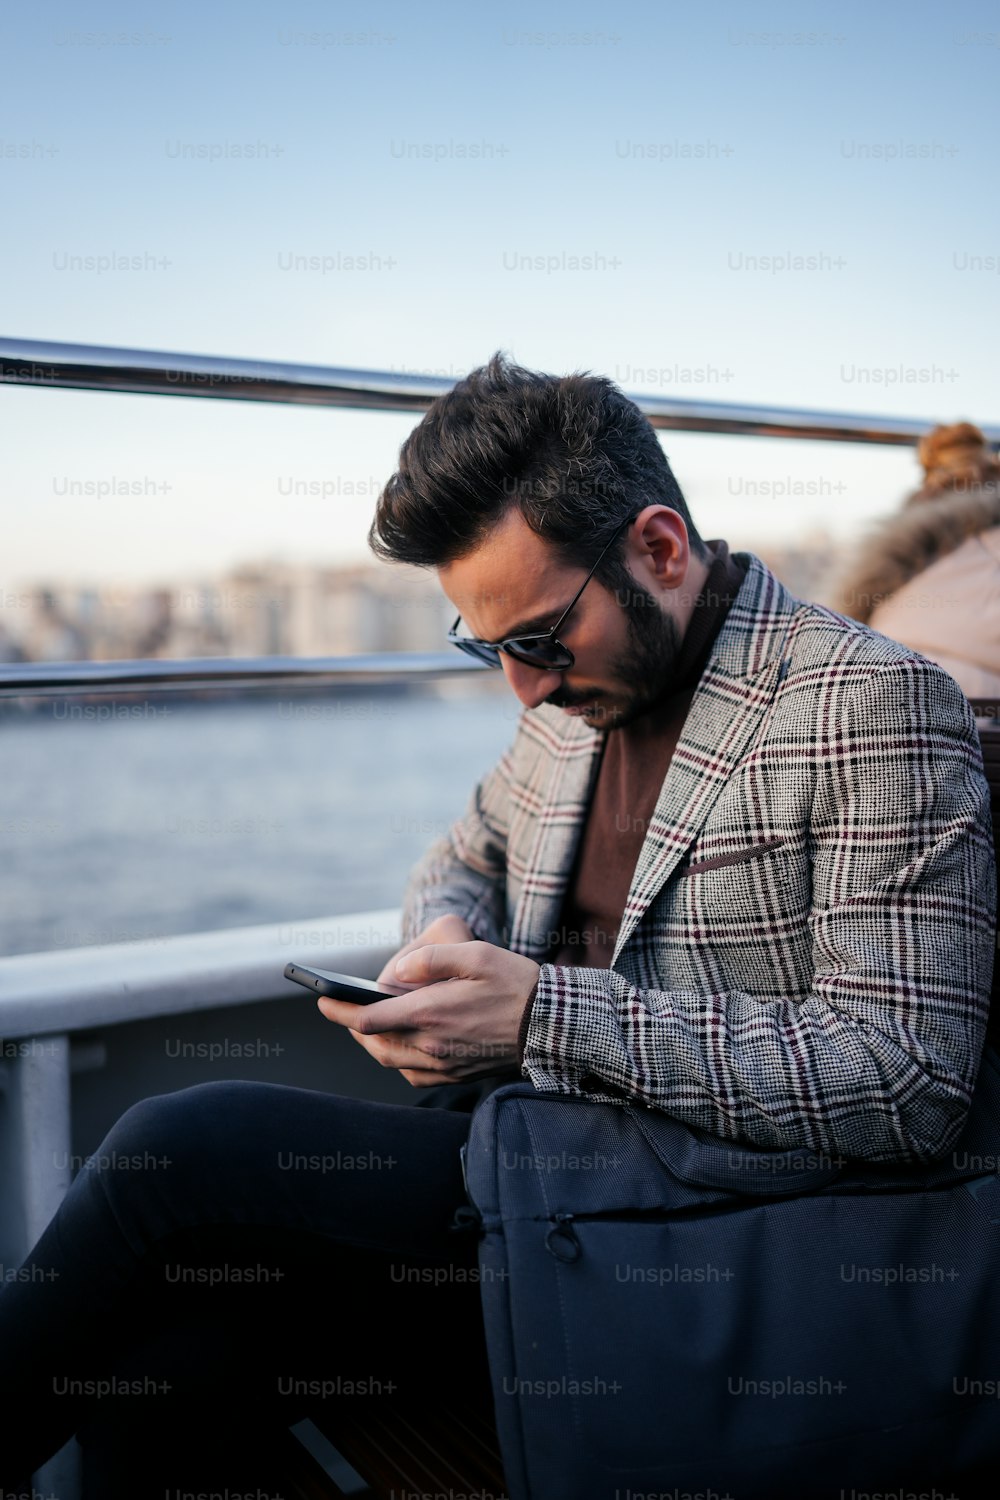 Un hombre sentado en un bote mirando su teléfono celular